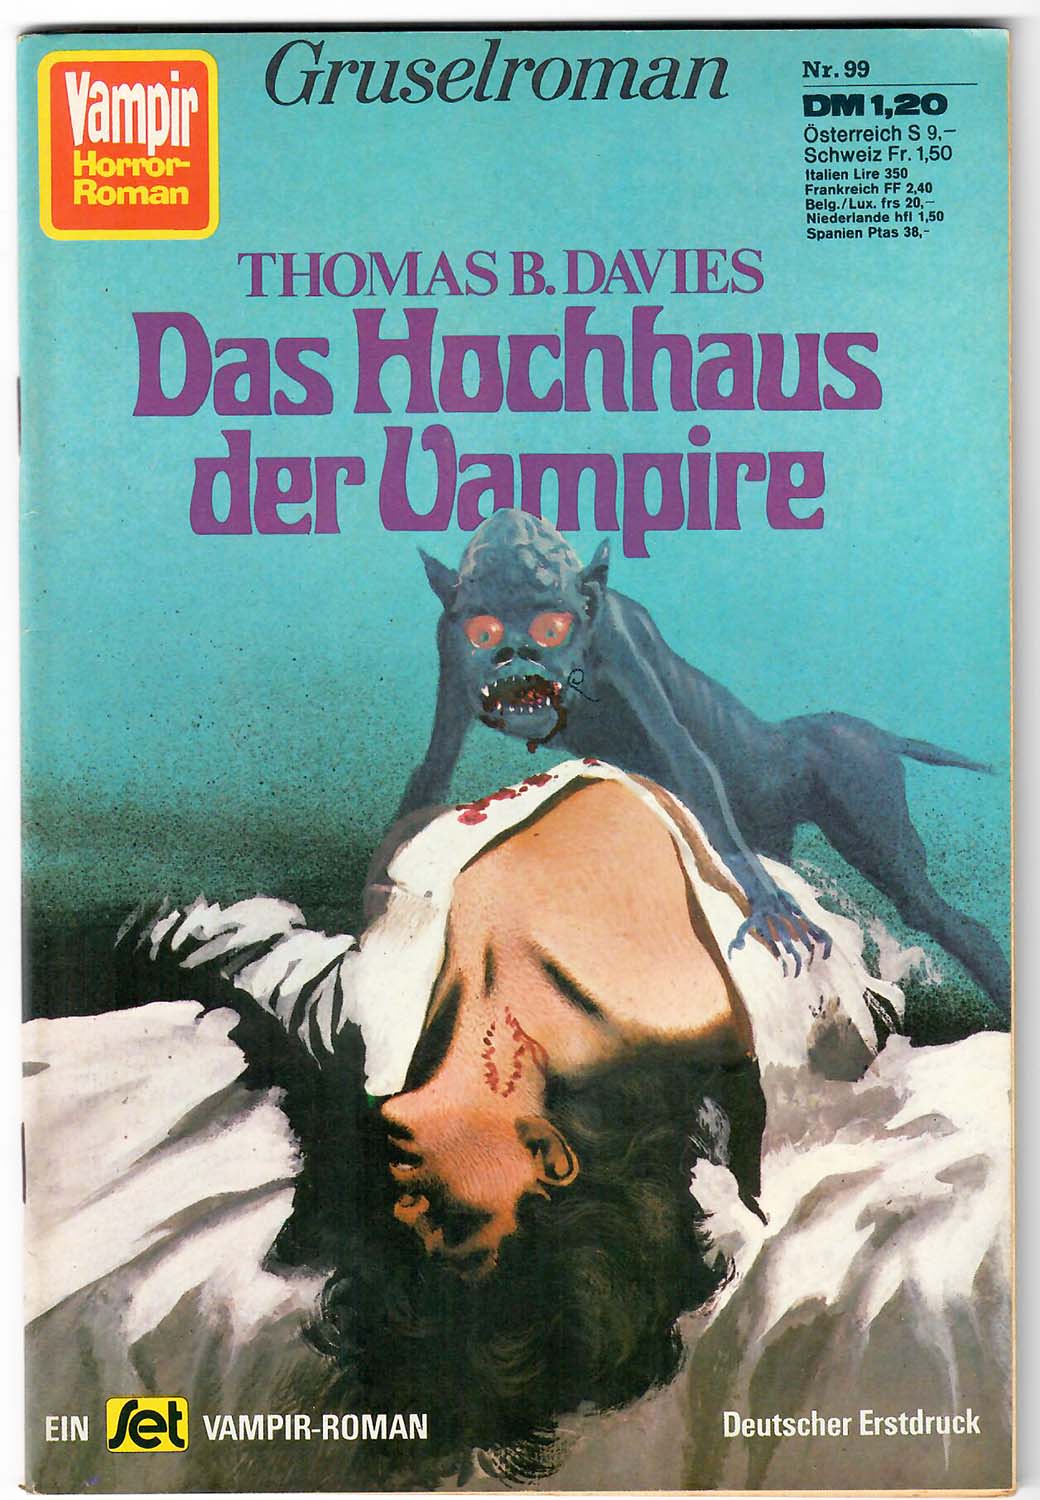 Vampir Horror-Roman #99